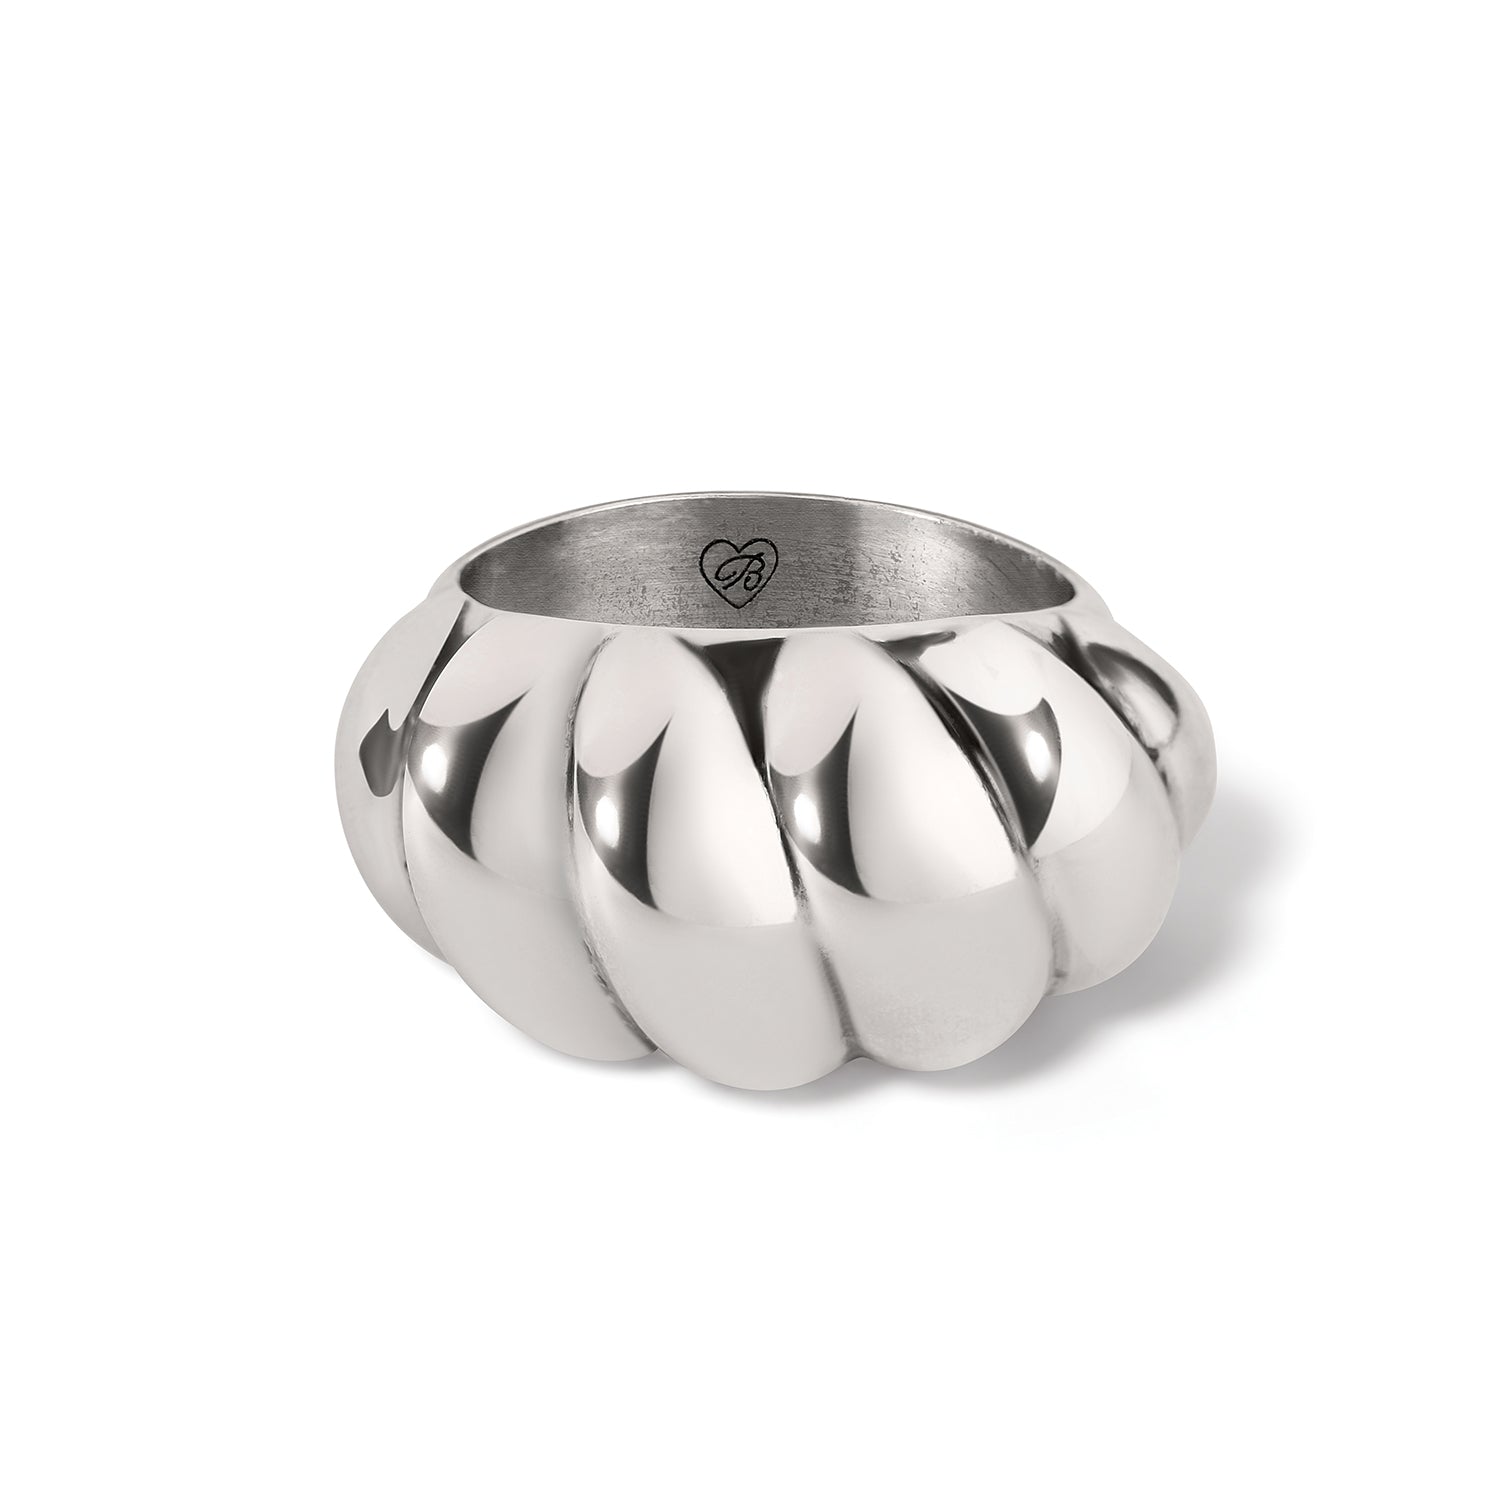 Athena Ring Size 6 - Image 1 - Brighton